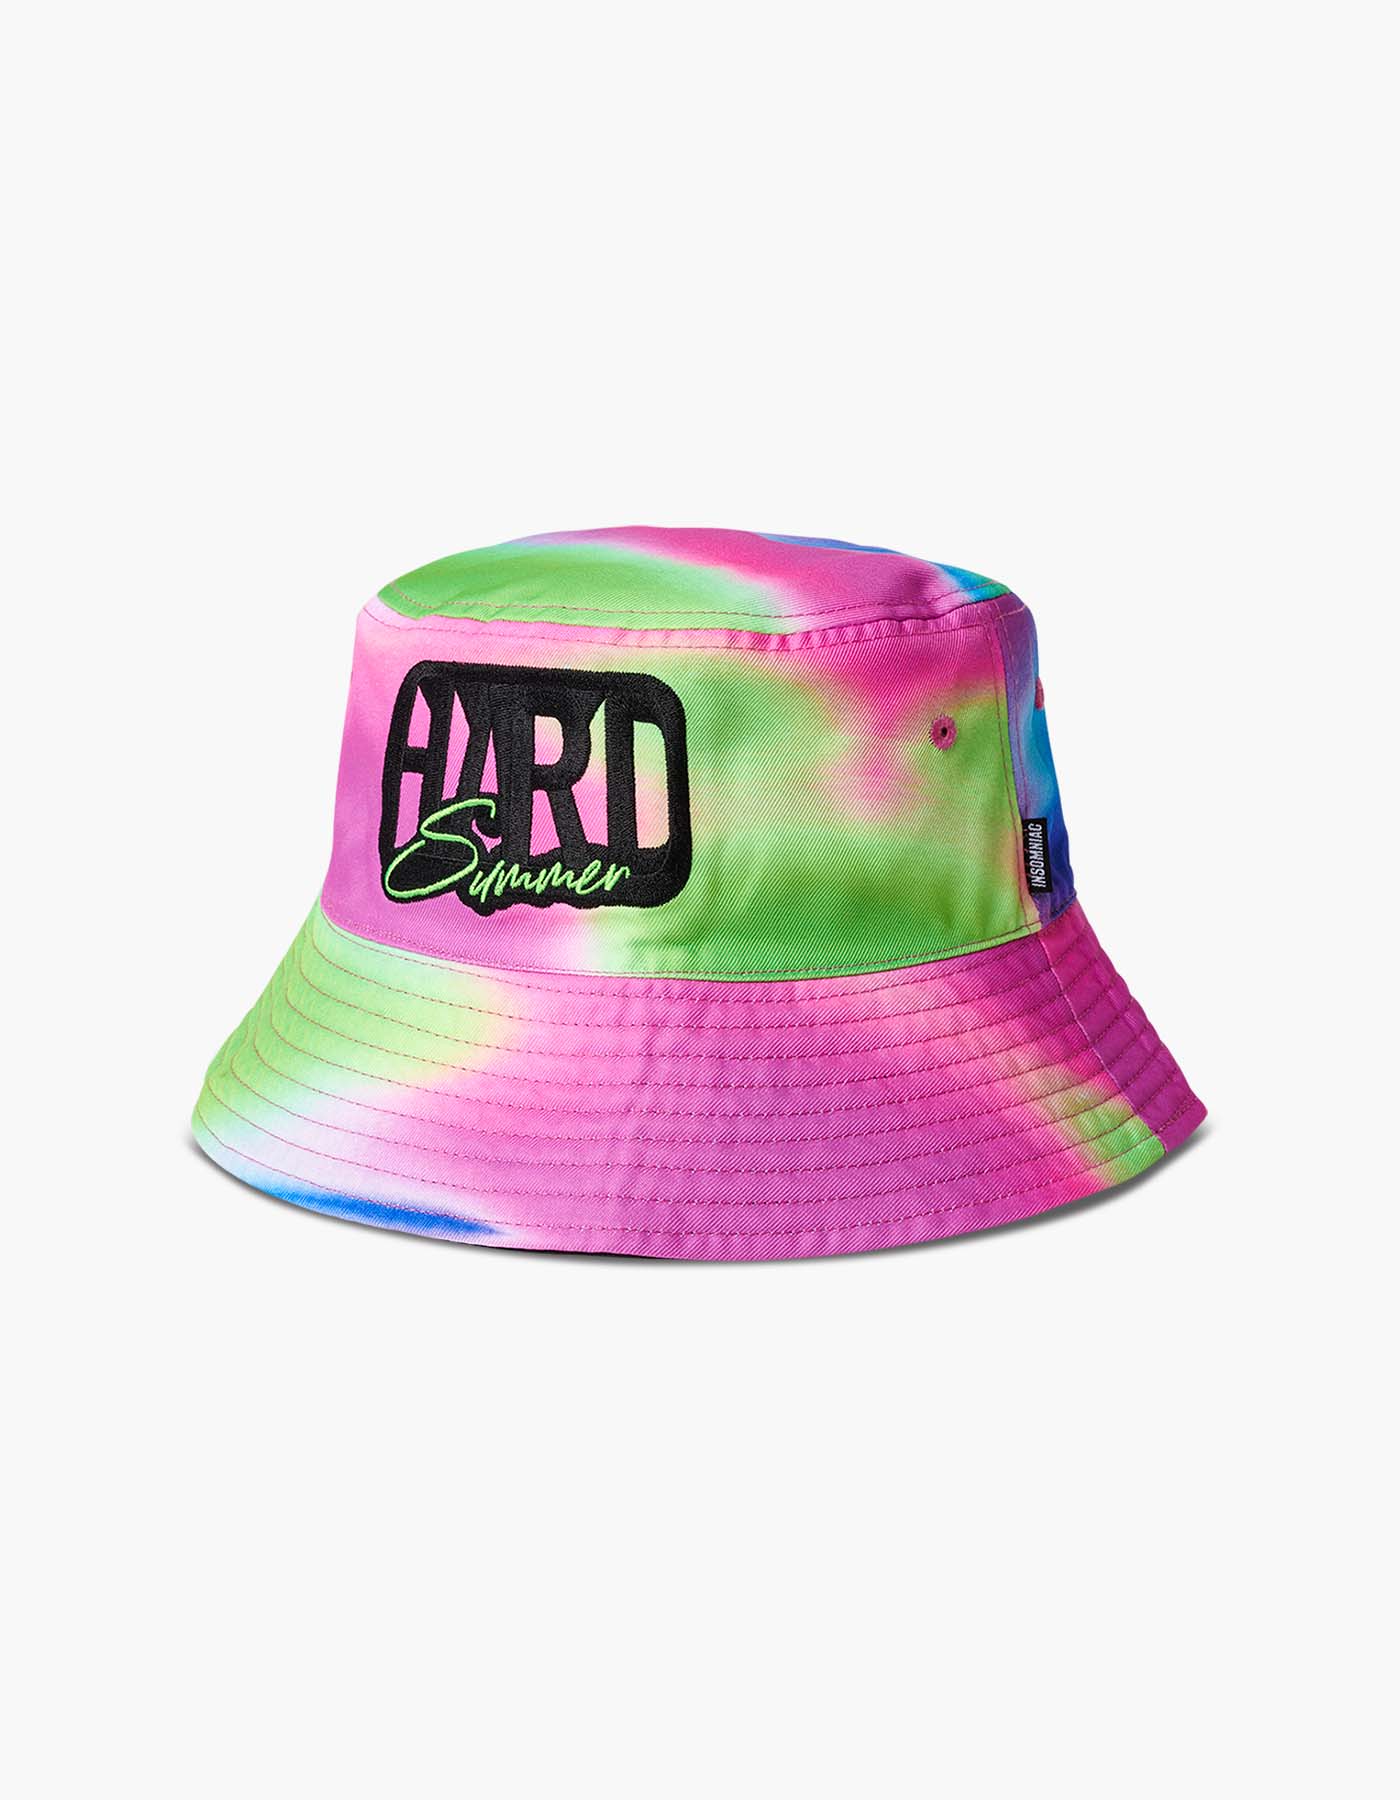 Hard Summer Reversible Bucket Hat